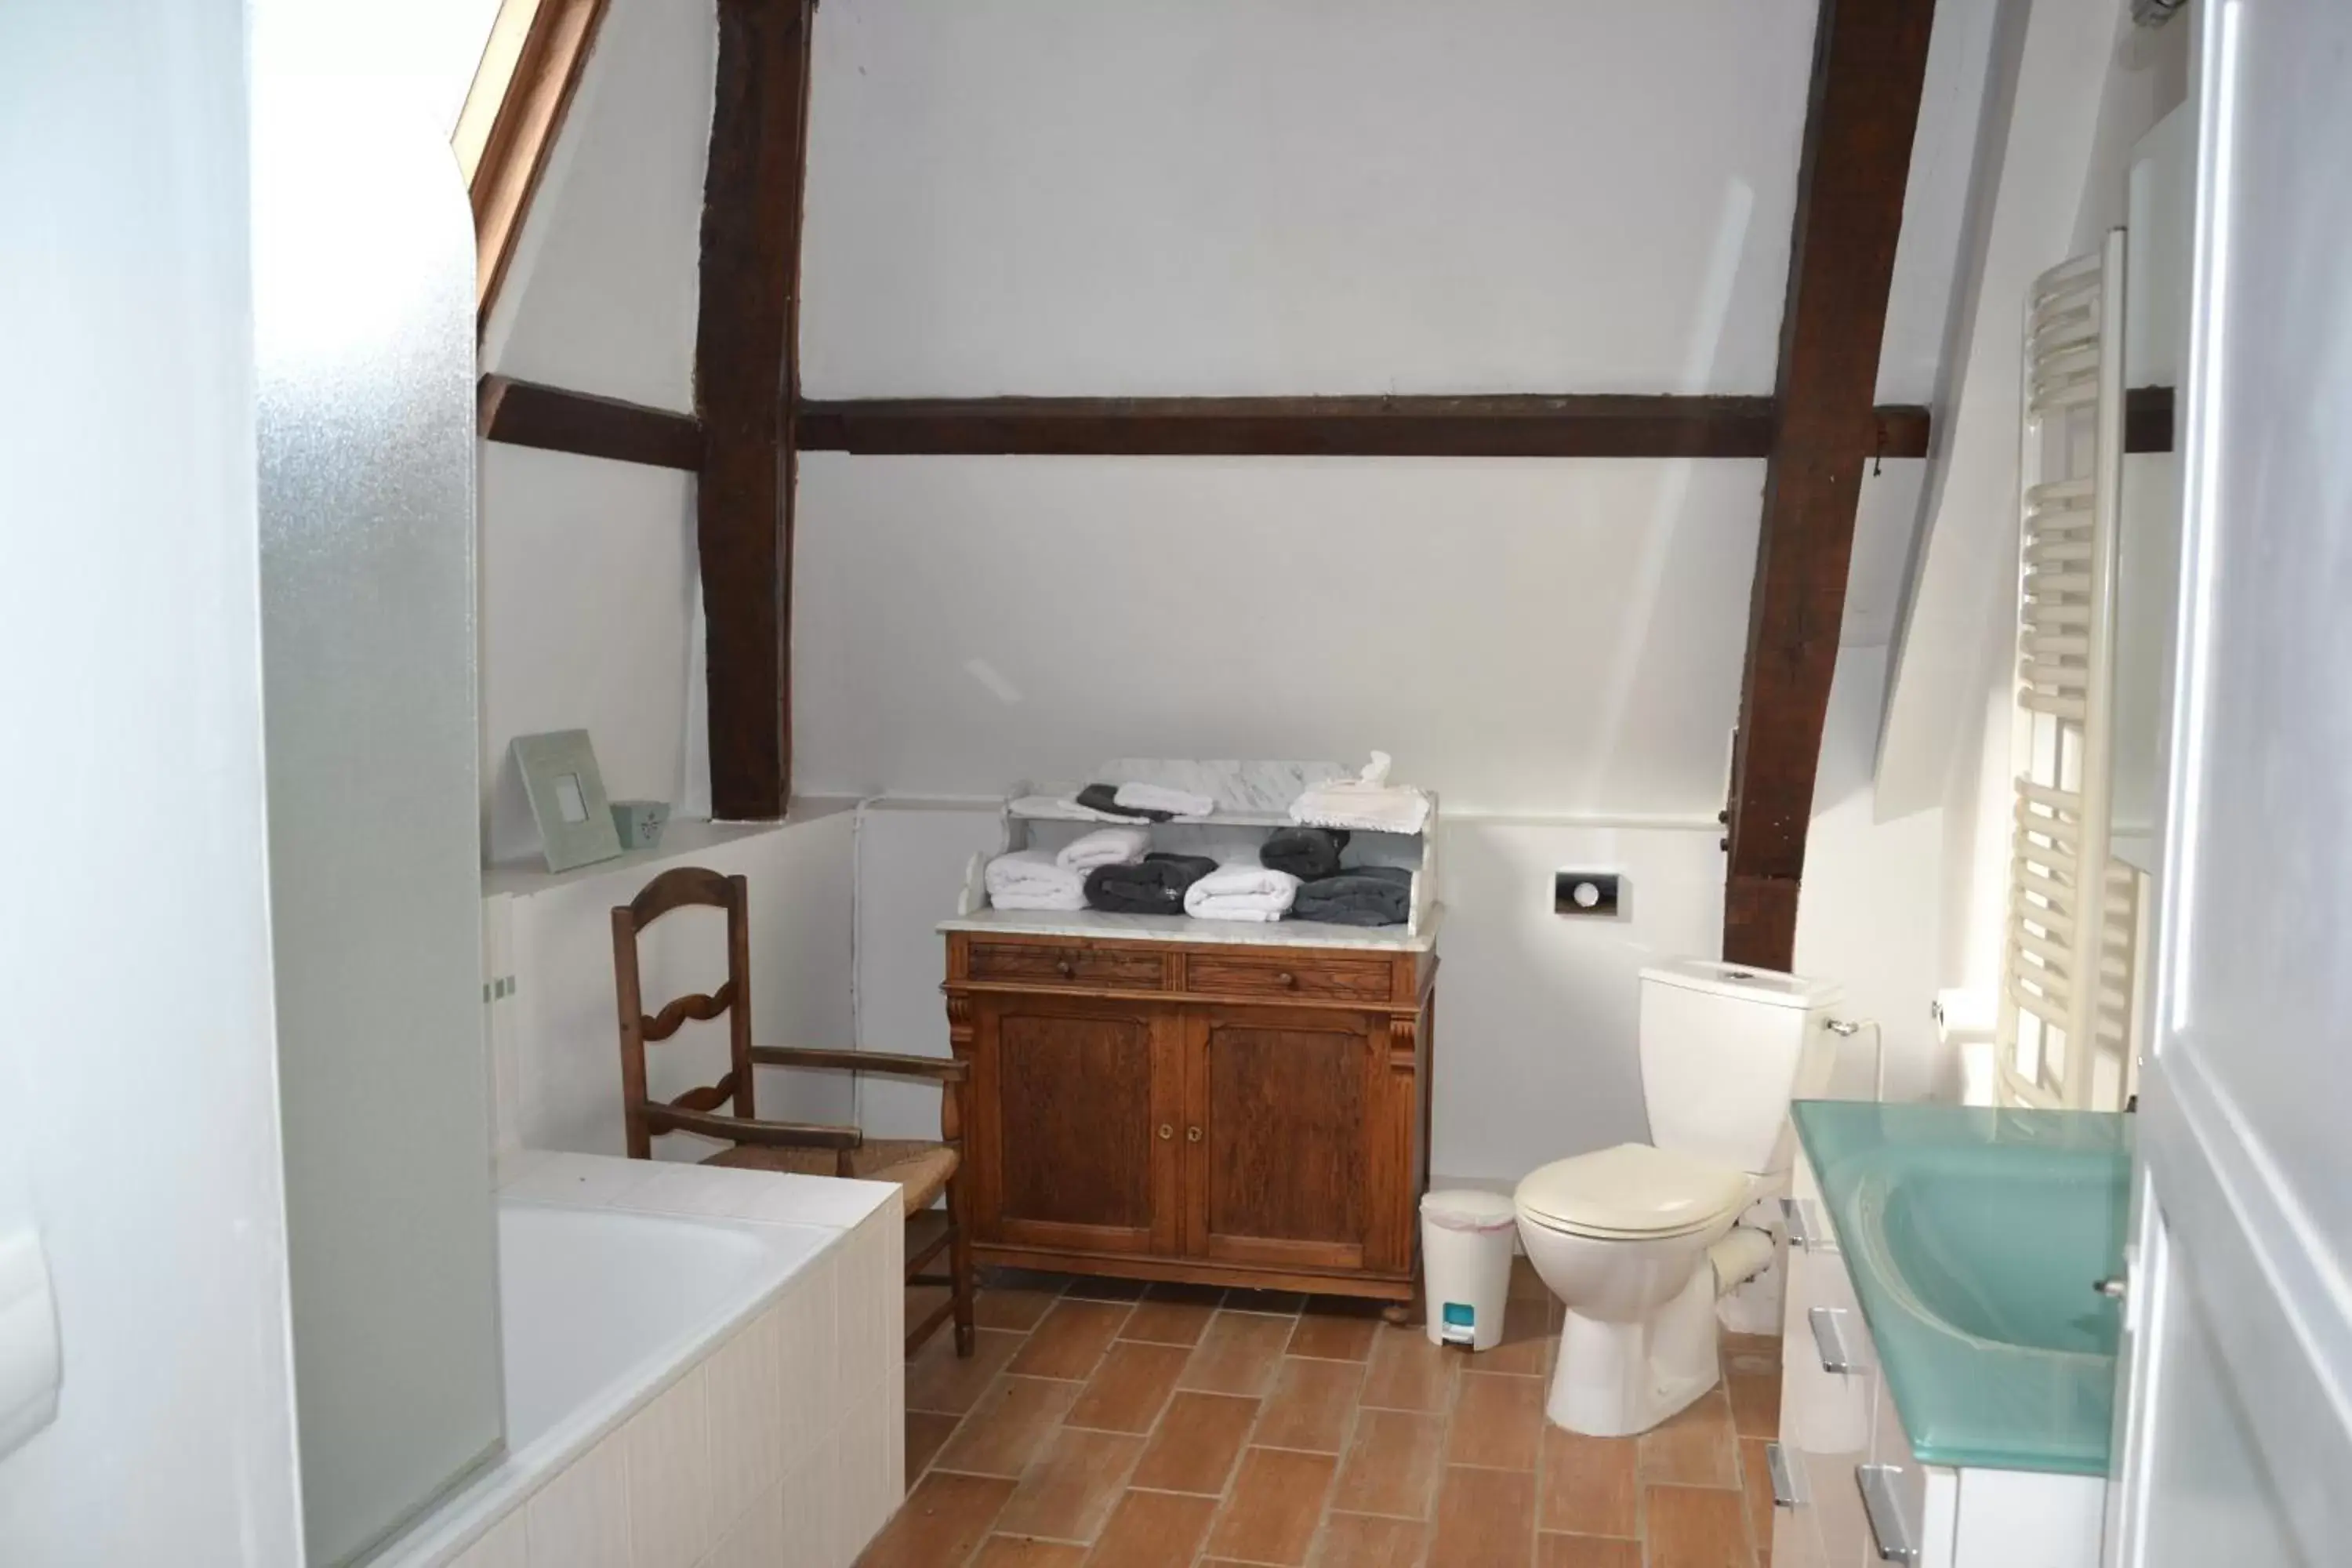 Bathroom in Les Trauchandieres de Saint Malo